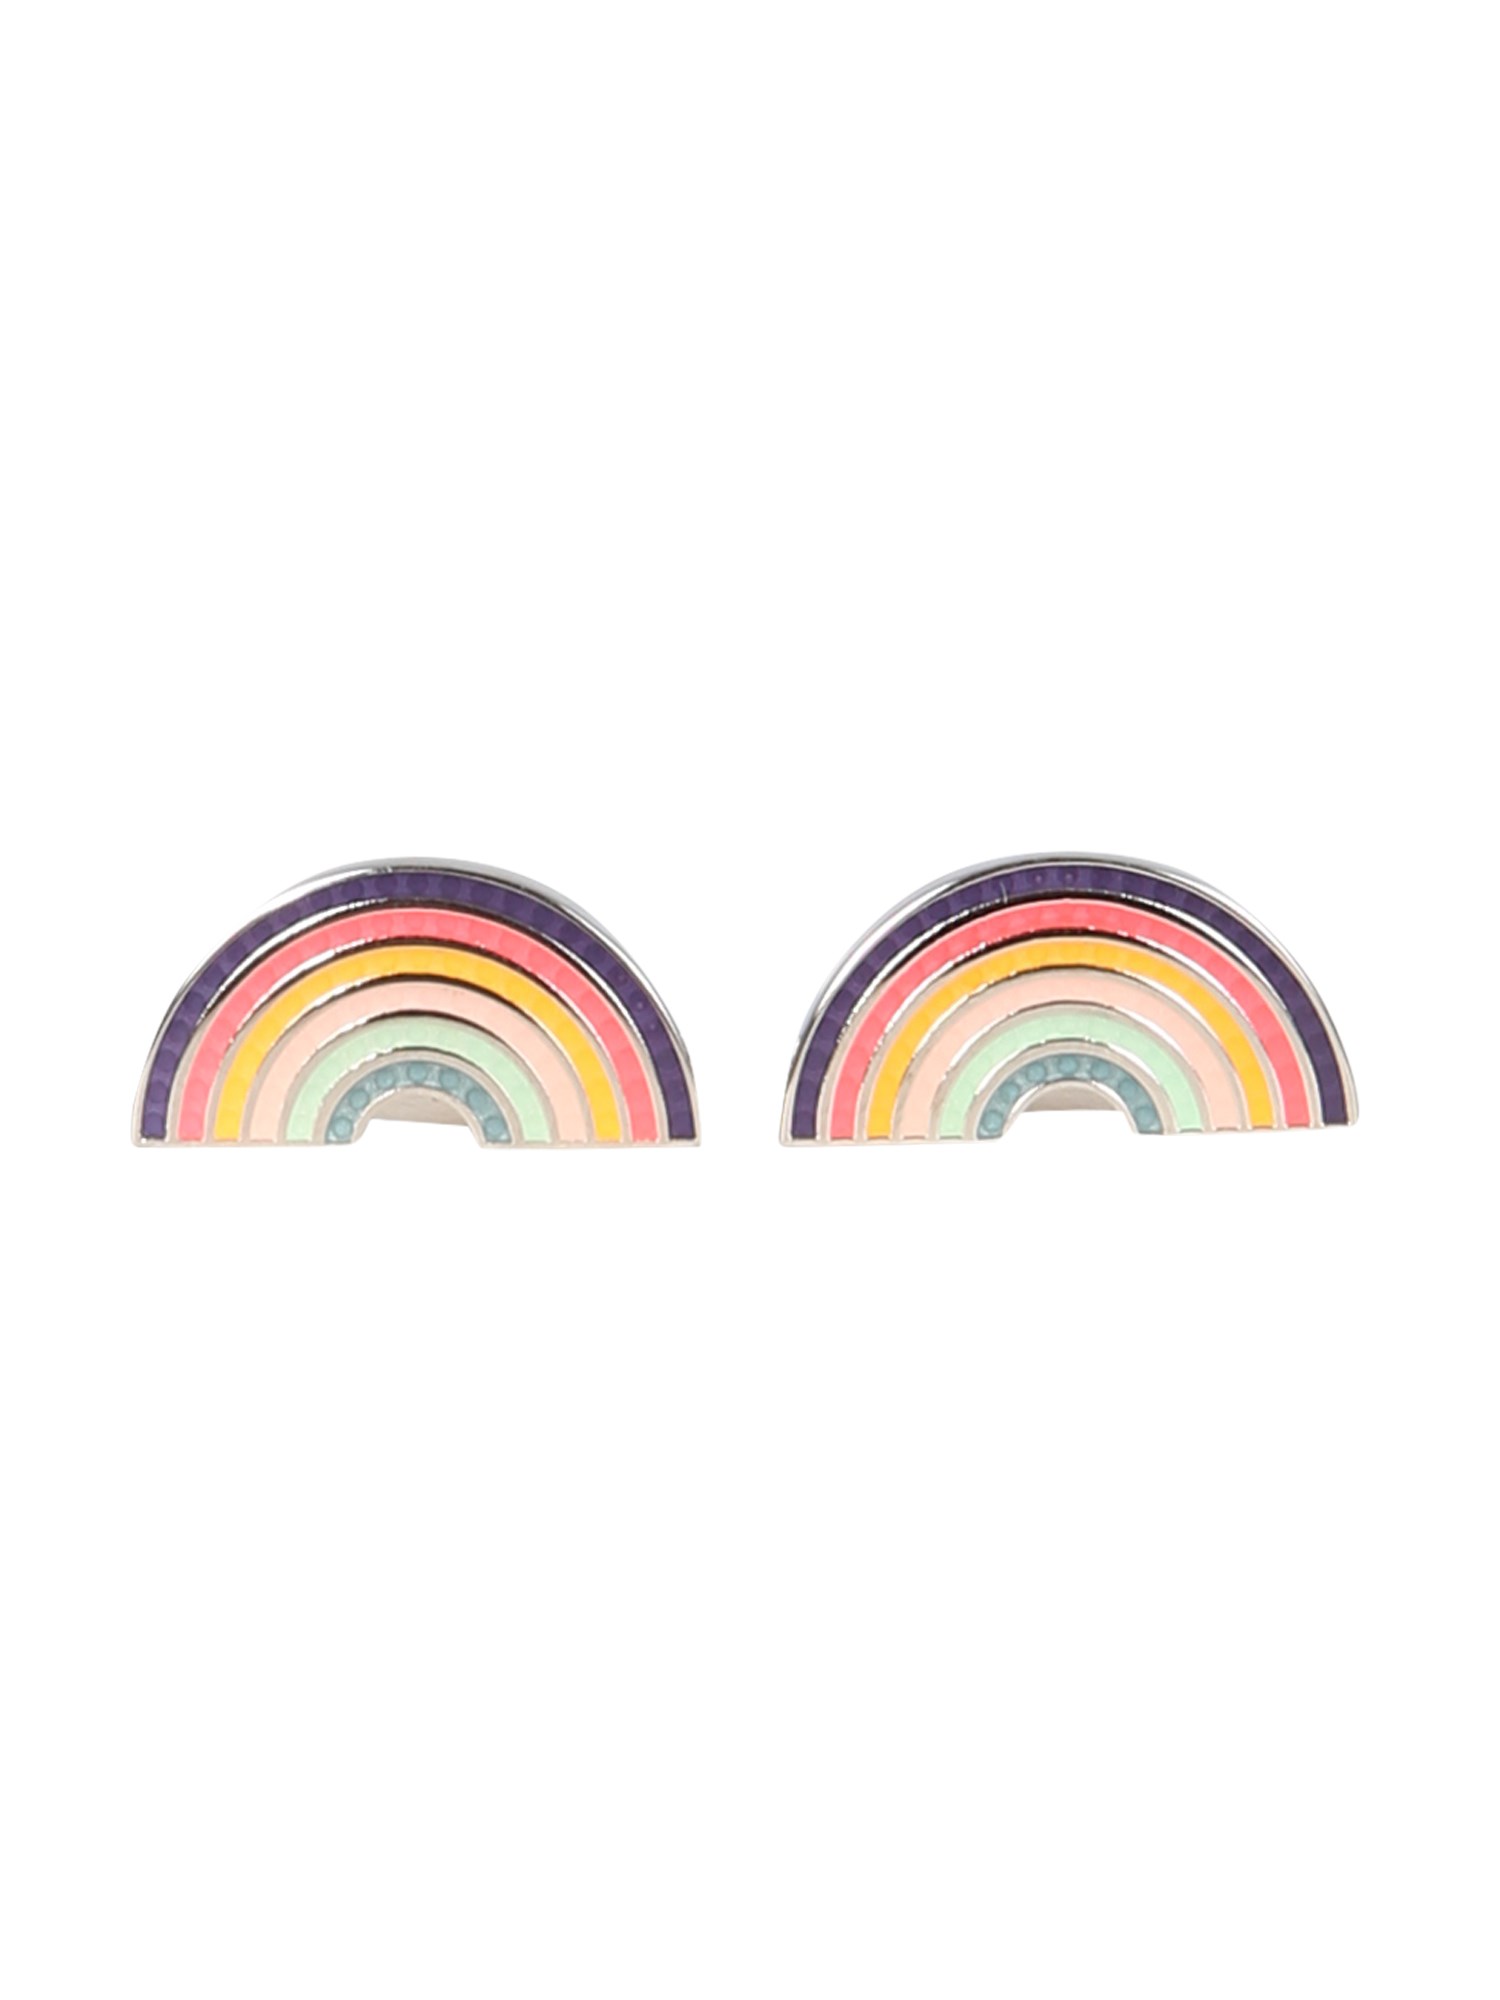 paul smith rainbow cufflinks